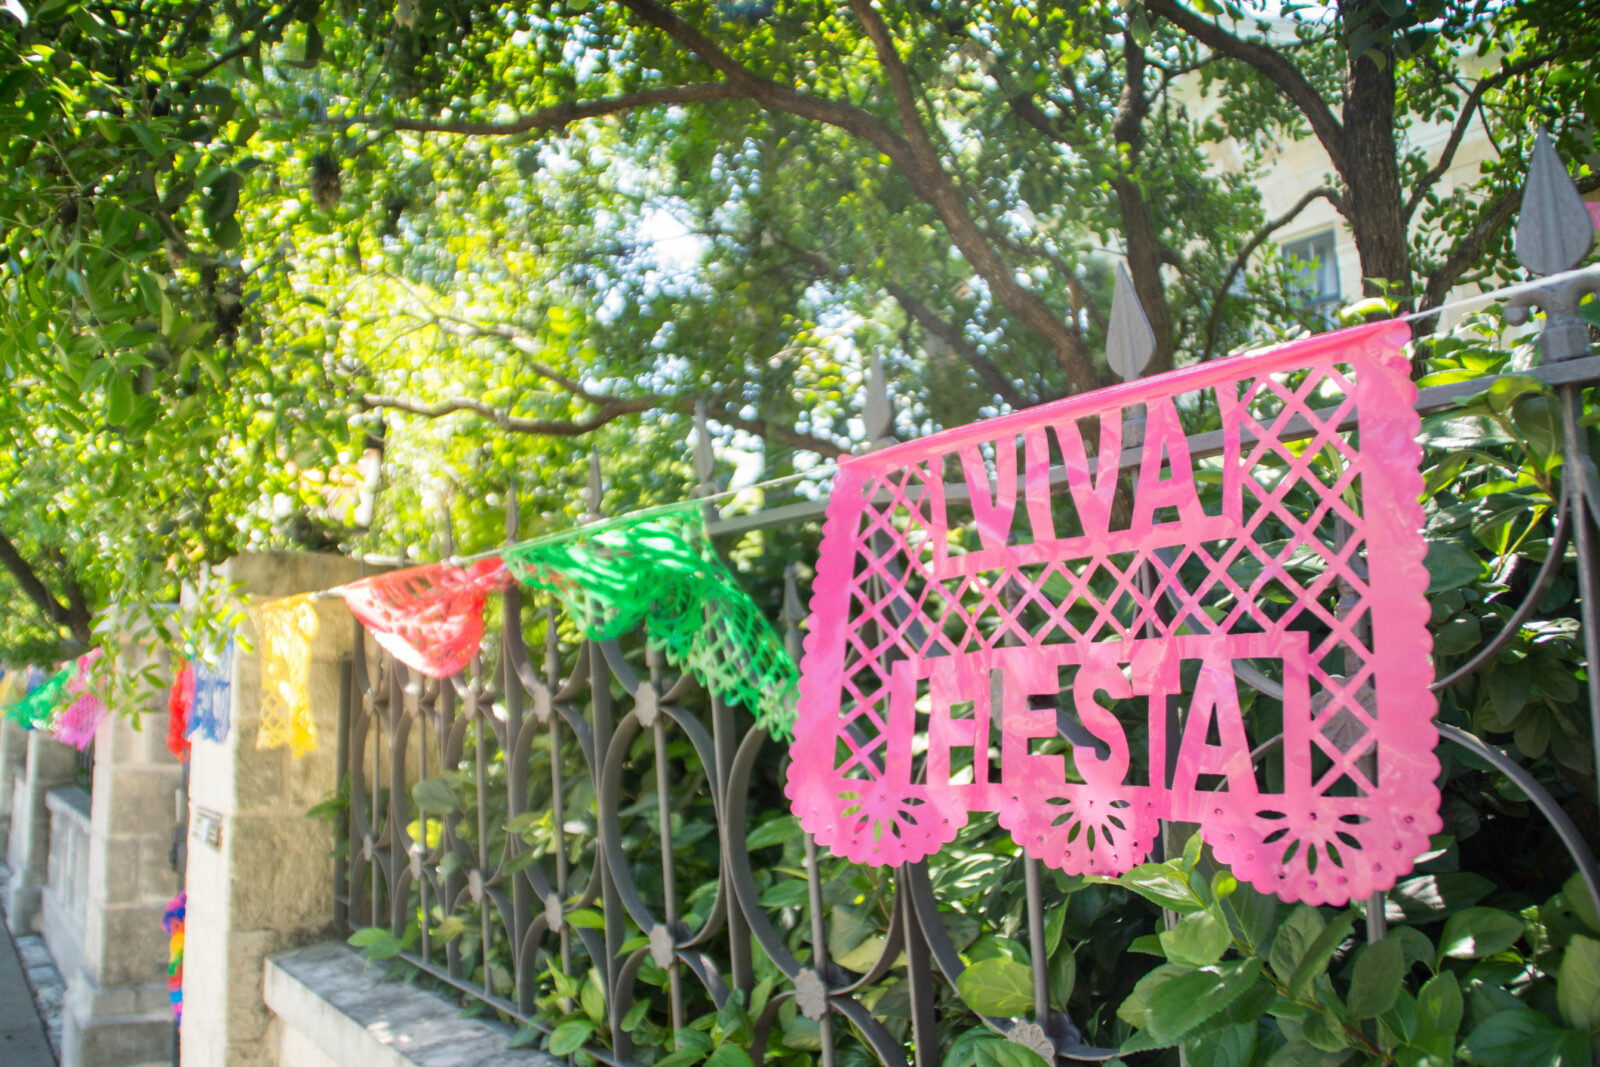 Viva Fiesta decorations during San Antonio fiesta in King William historic district, Texas, USA